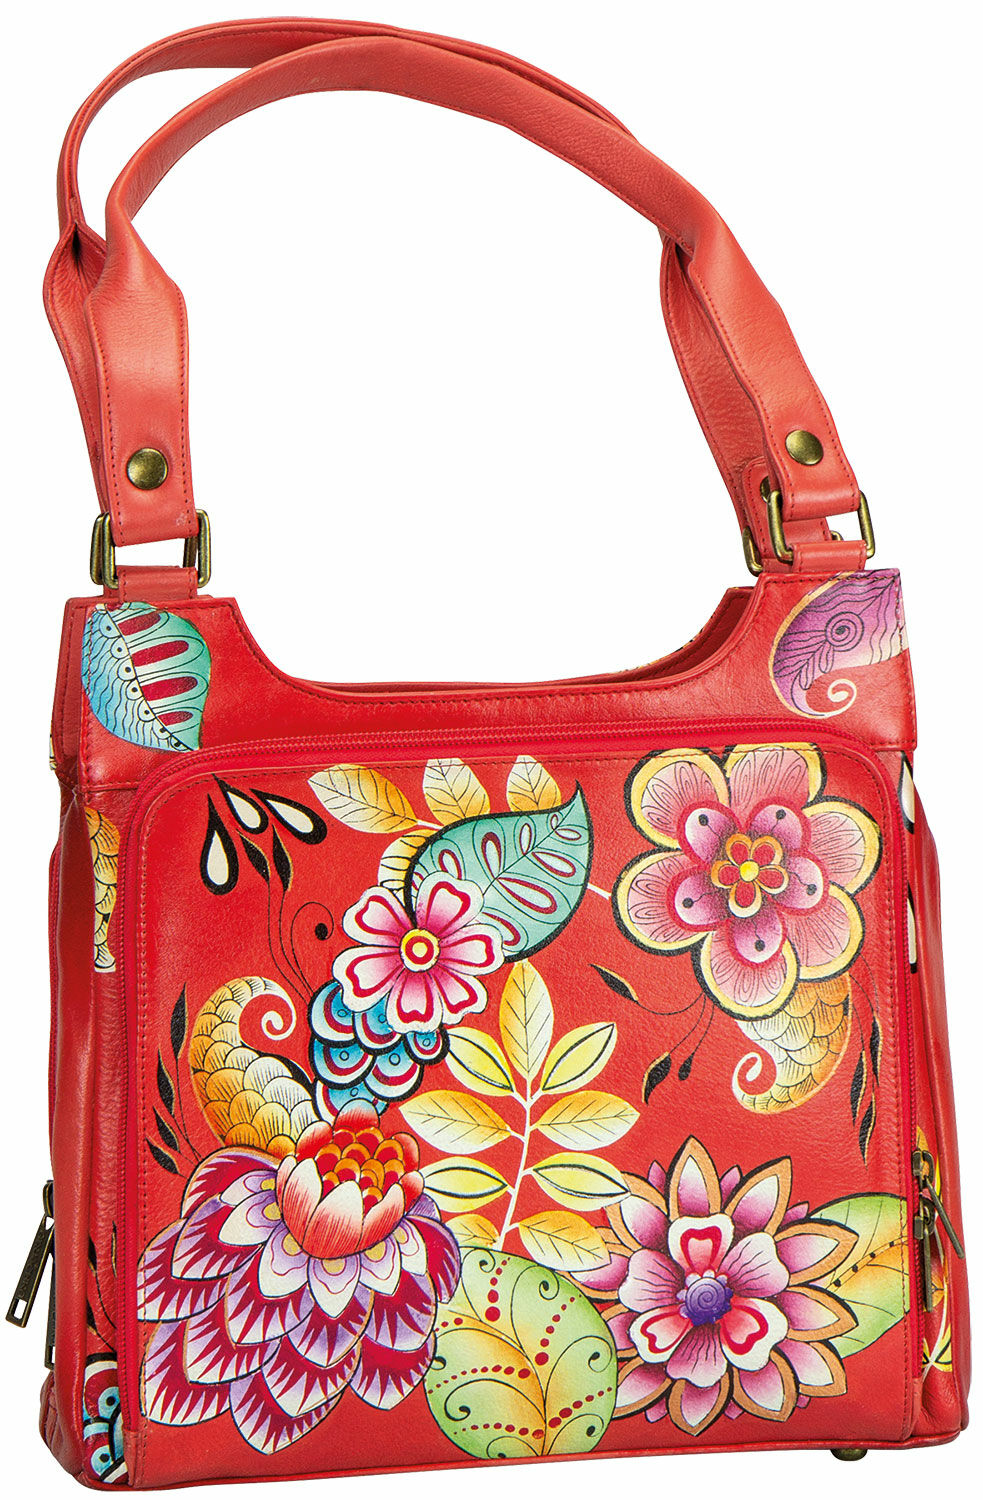 Handbag "Red Passion" by the brand Anuschka®